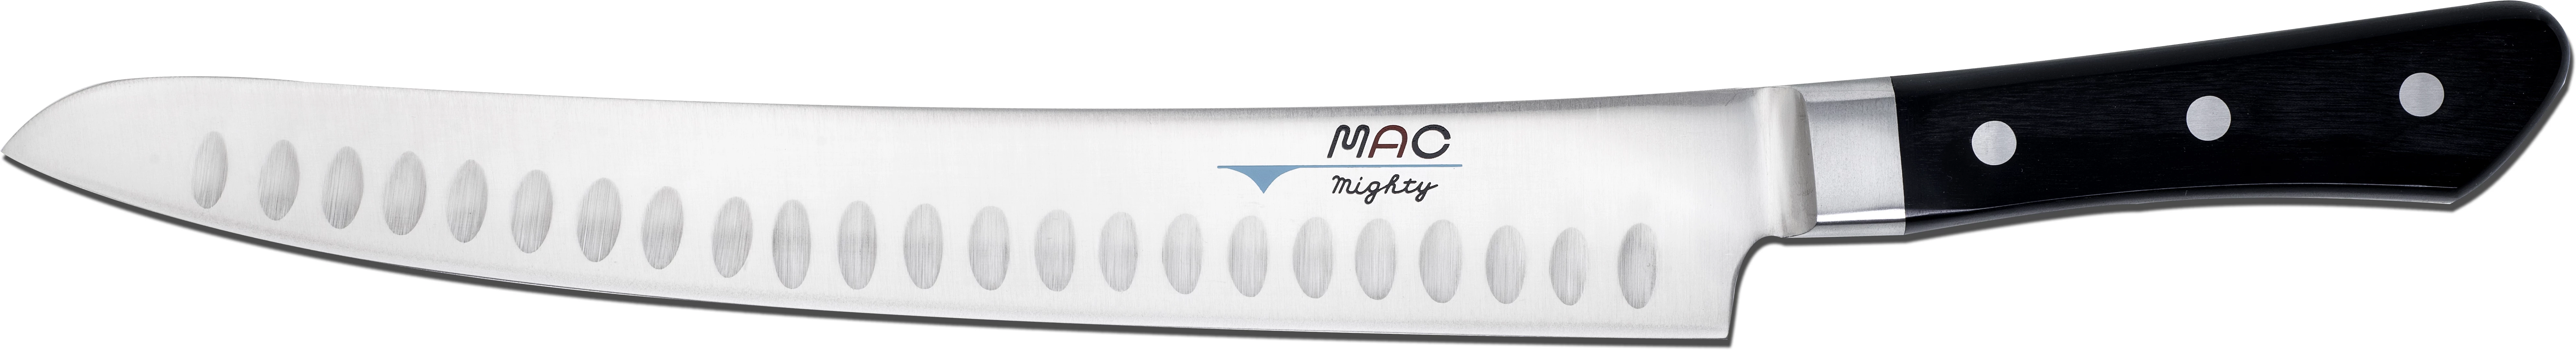 MAC Pro filetkniv, luftskær, L27 cm